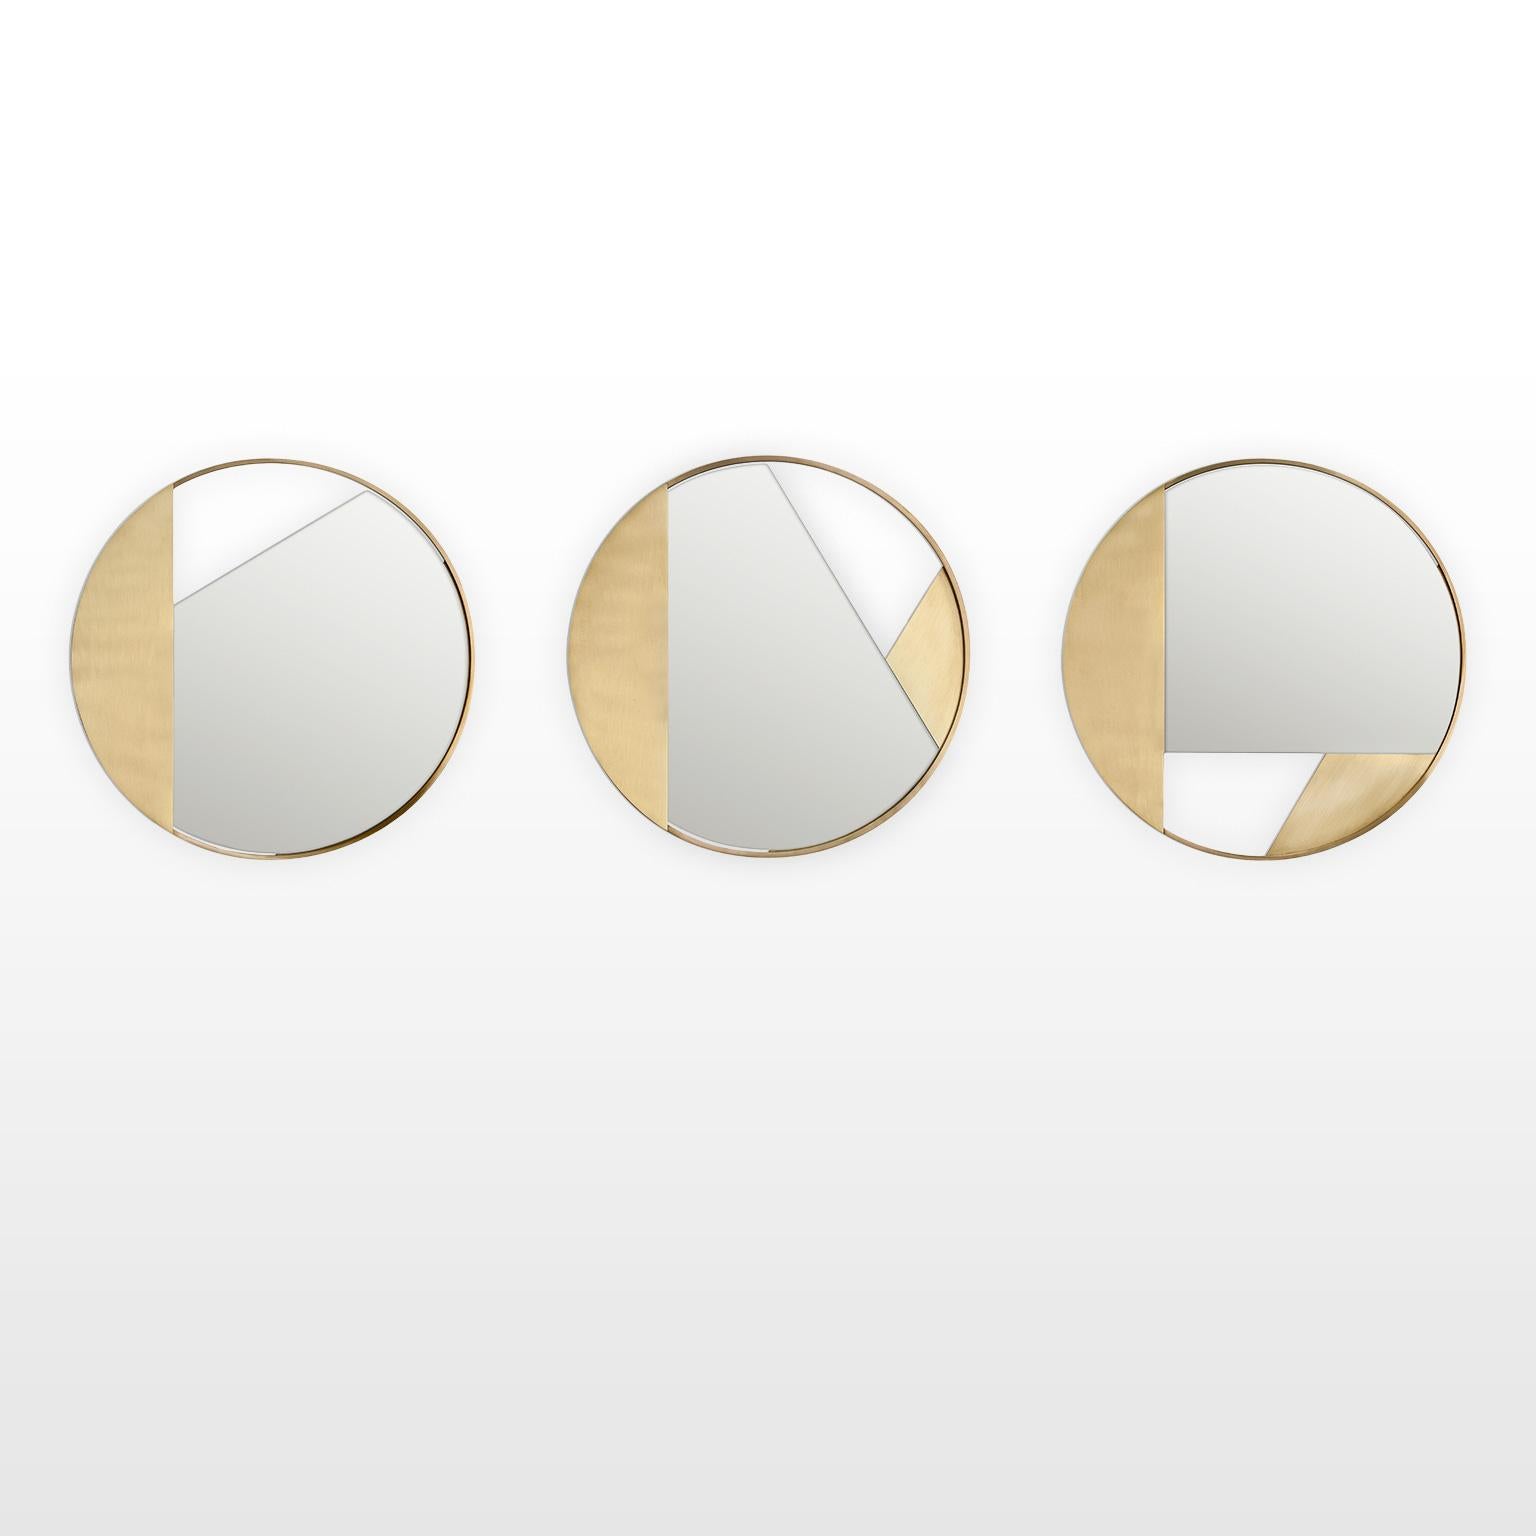 Other Contemporary Limited Edition Brass Mirror, Revolution 55 V3 by Edizione Limitata For Sale